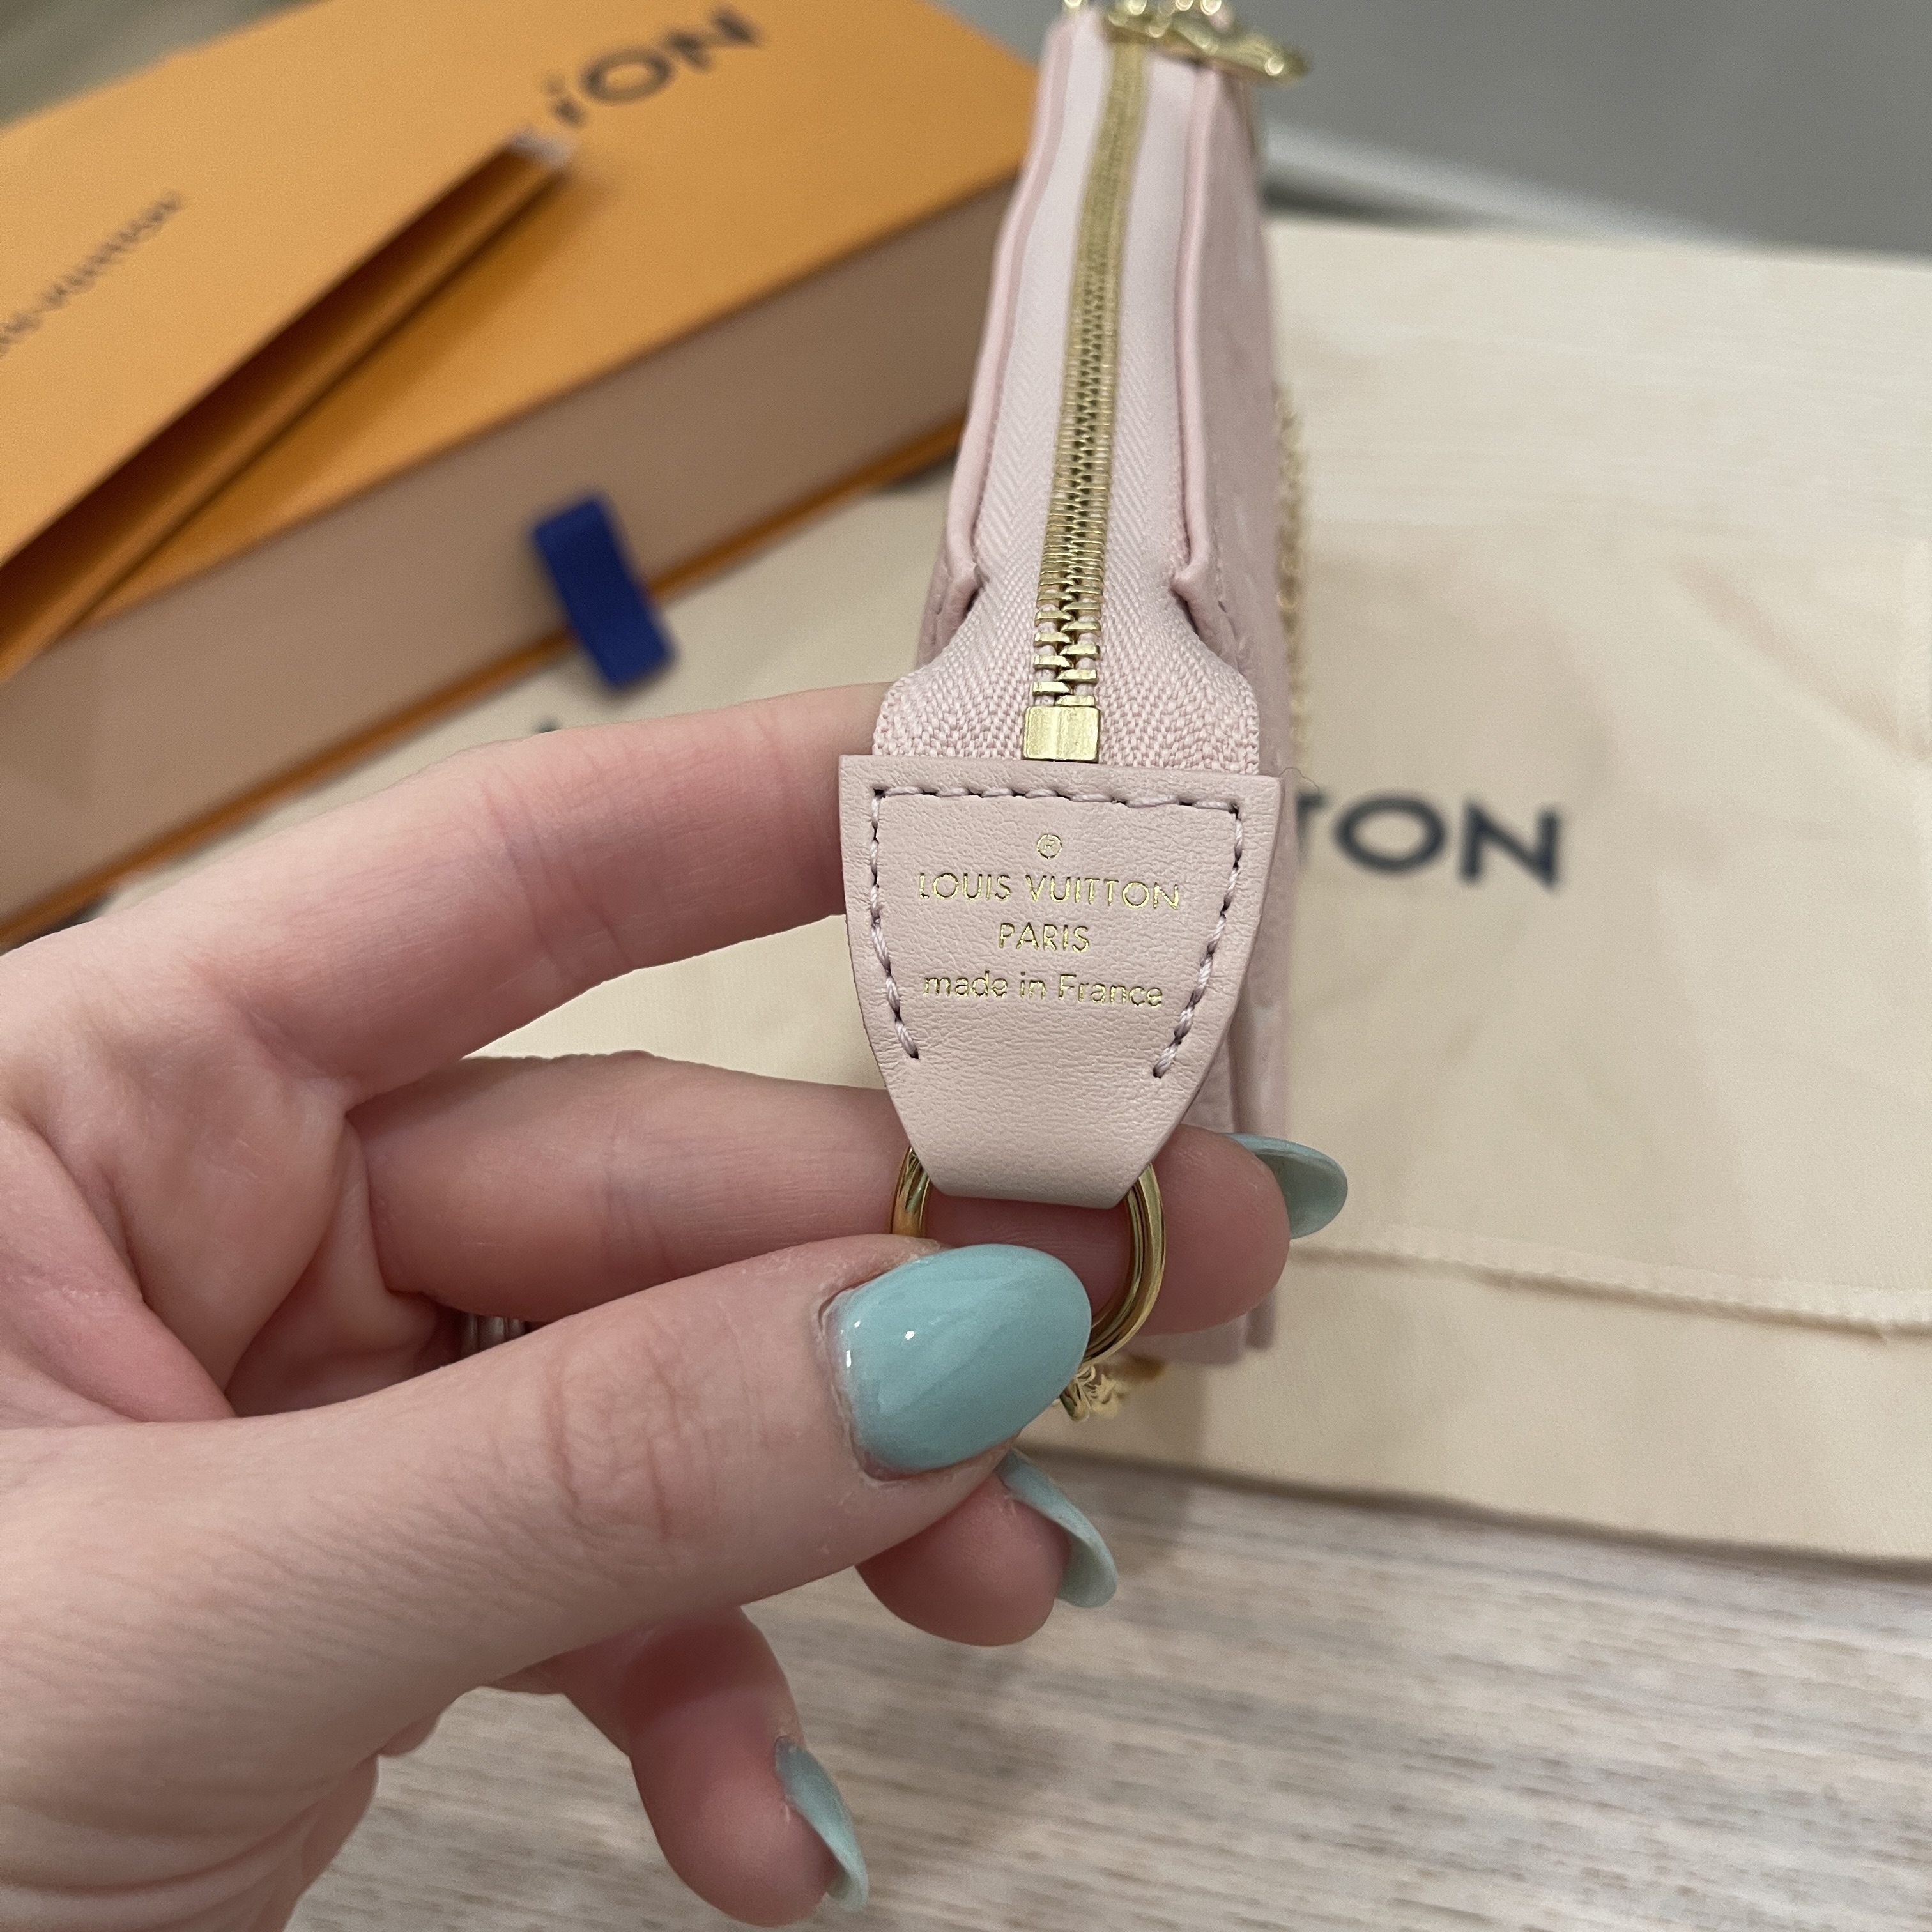 Louis Vuitton Key Pouch Monogram Empreinte Giant Broderies Pink